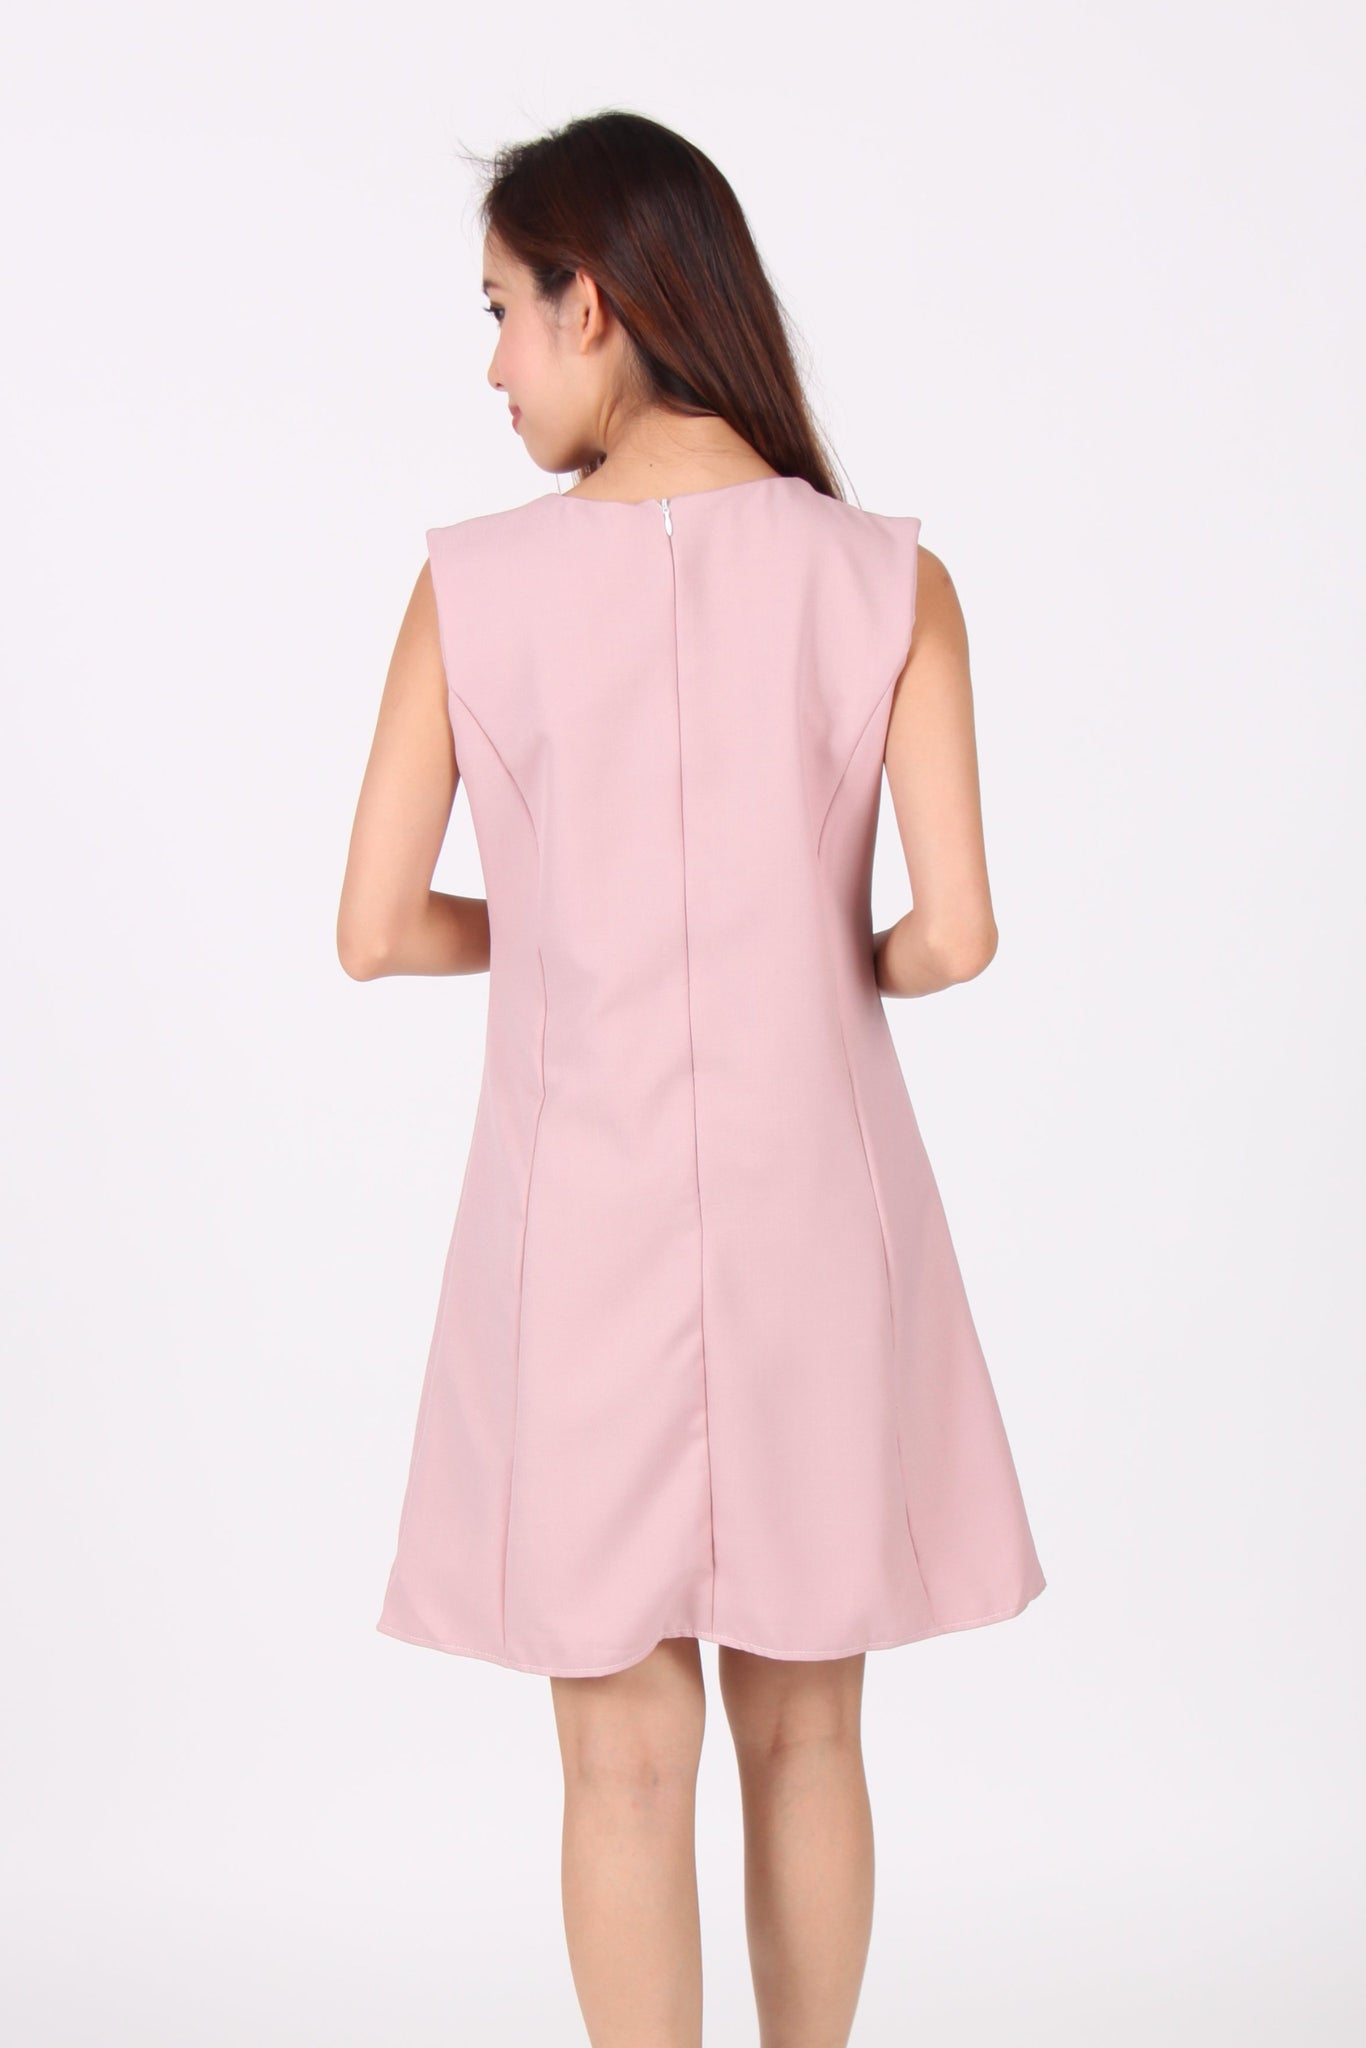 Sleeveless Shift Dress in Pink